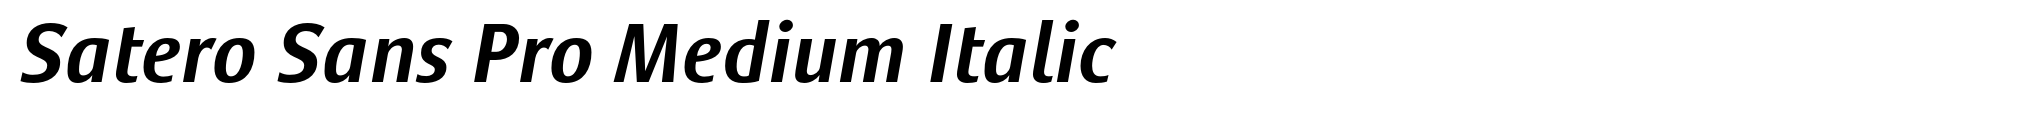 Satero Sans Pro Medium Italic image